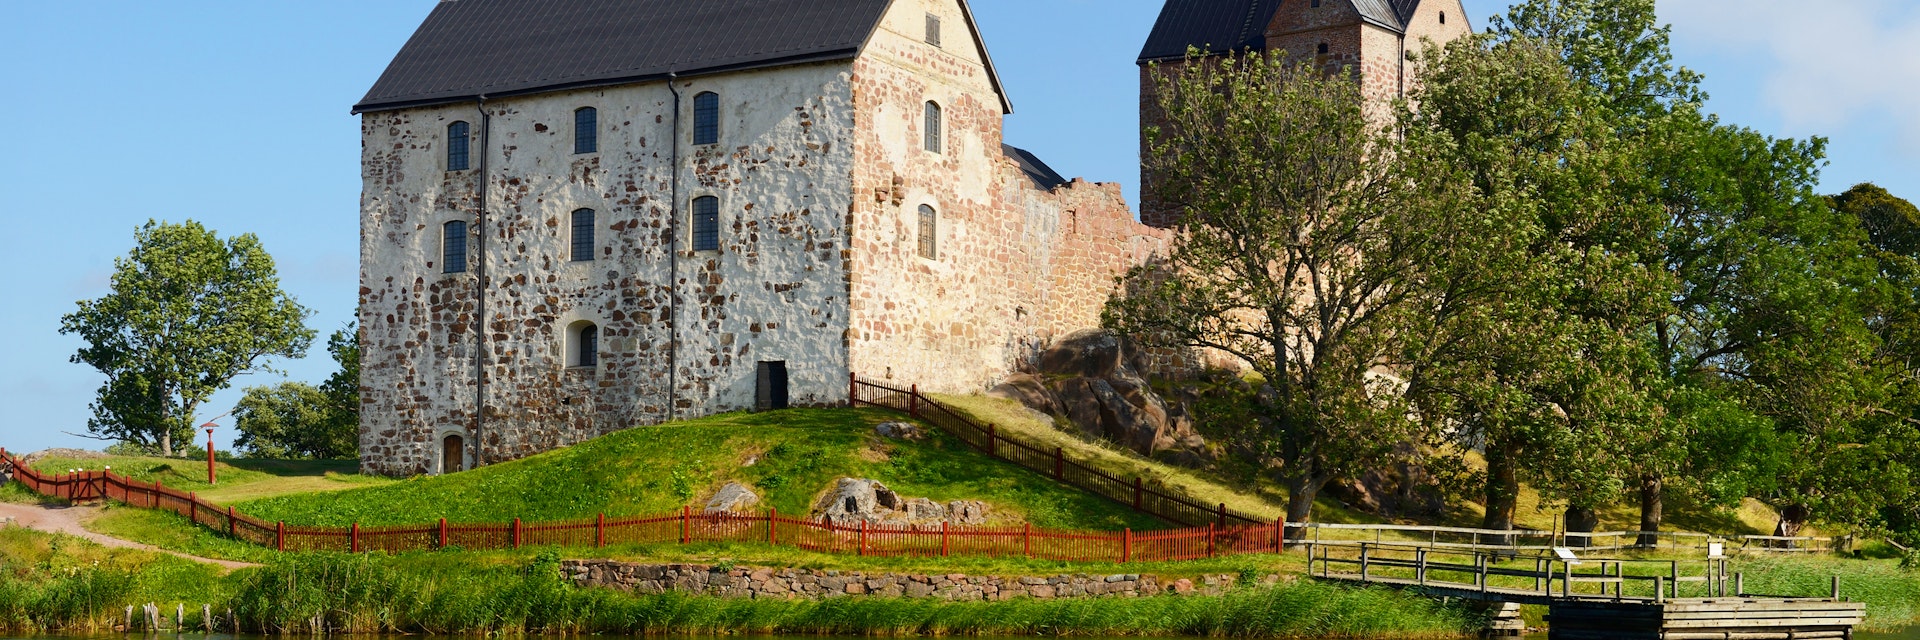 Kastelholm Castle,built in 14th century, Aland islands.